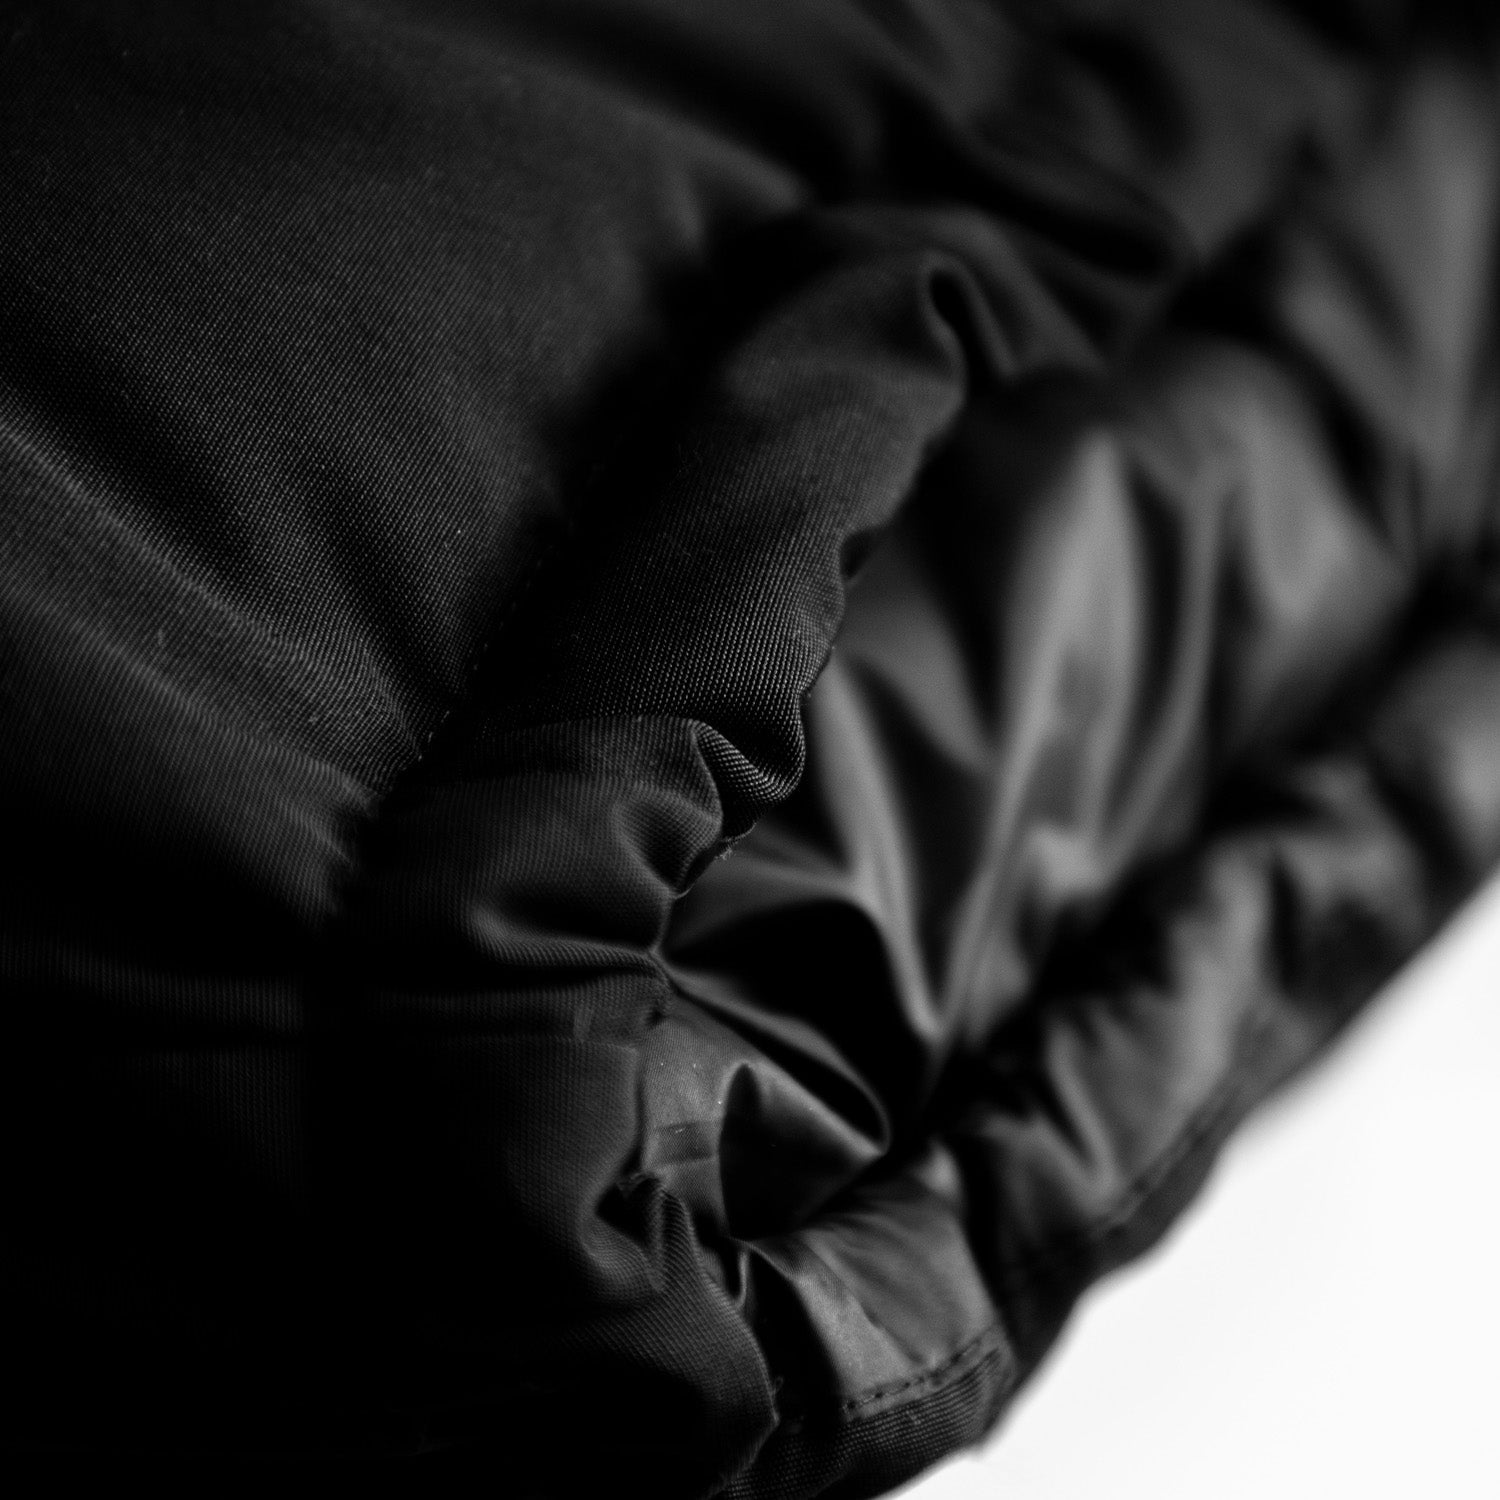 Choupette-print crew neck sweatshirt BB Igloo Jacket Black - OUTERWEAR - Canada